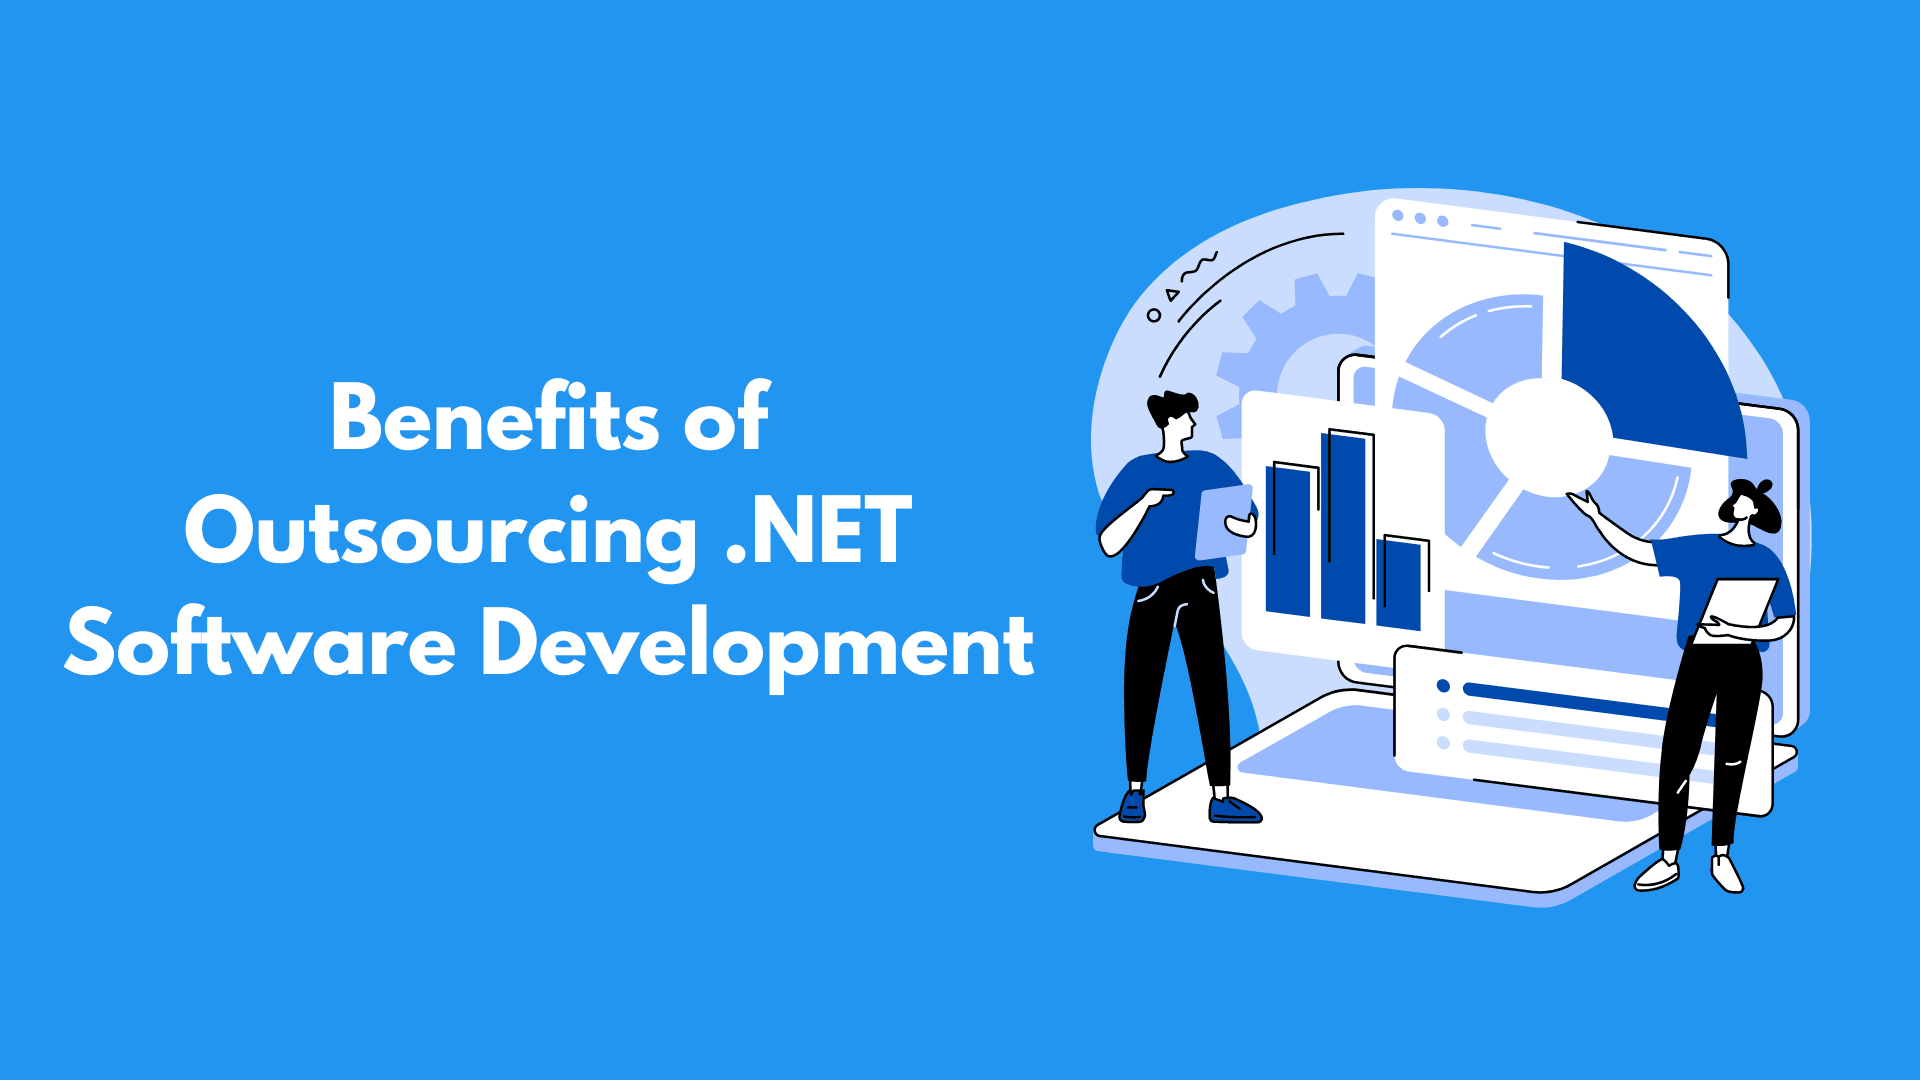 Benefits of Outsourcing .NET Software Development